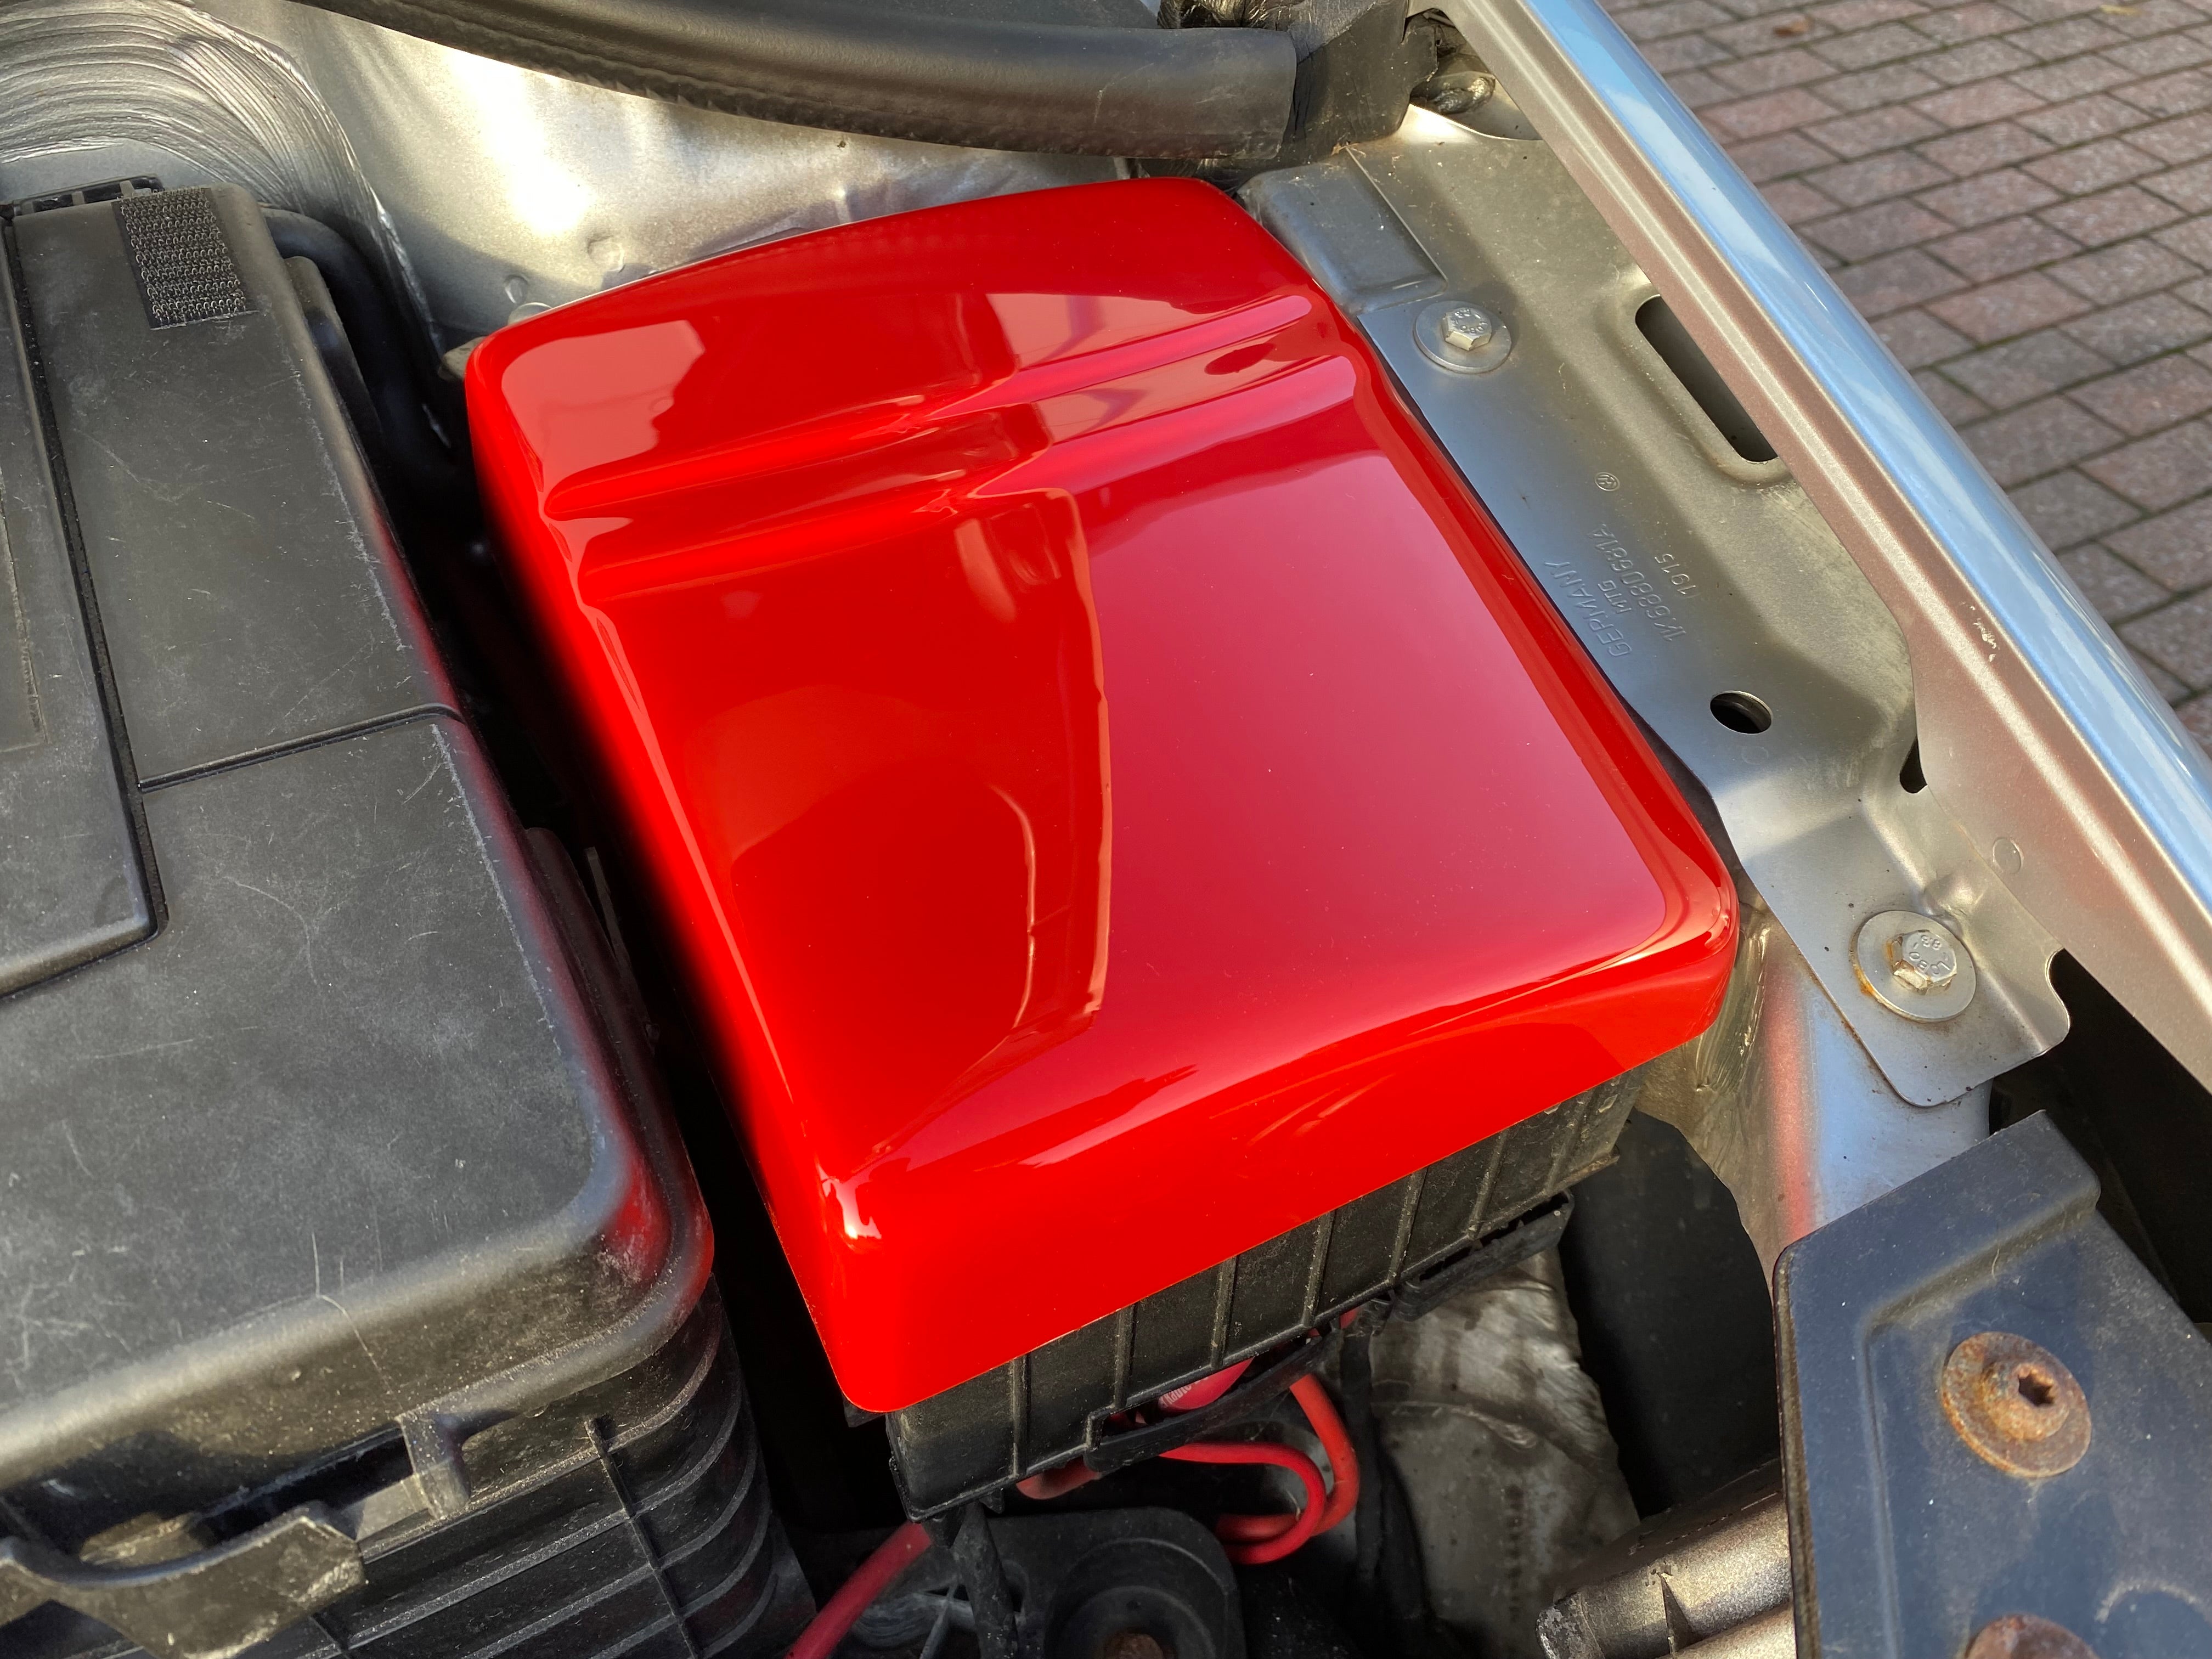 Proform Fuse Box Cover - Mk5 Volkswagen Golf (Plastic Finishes)